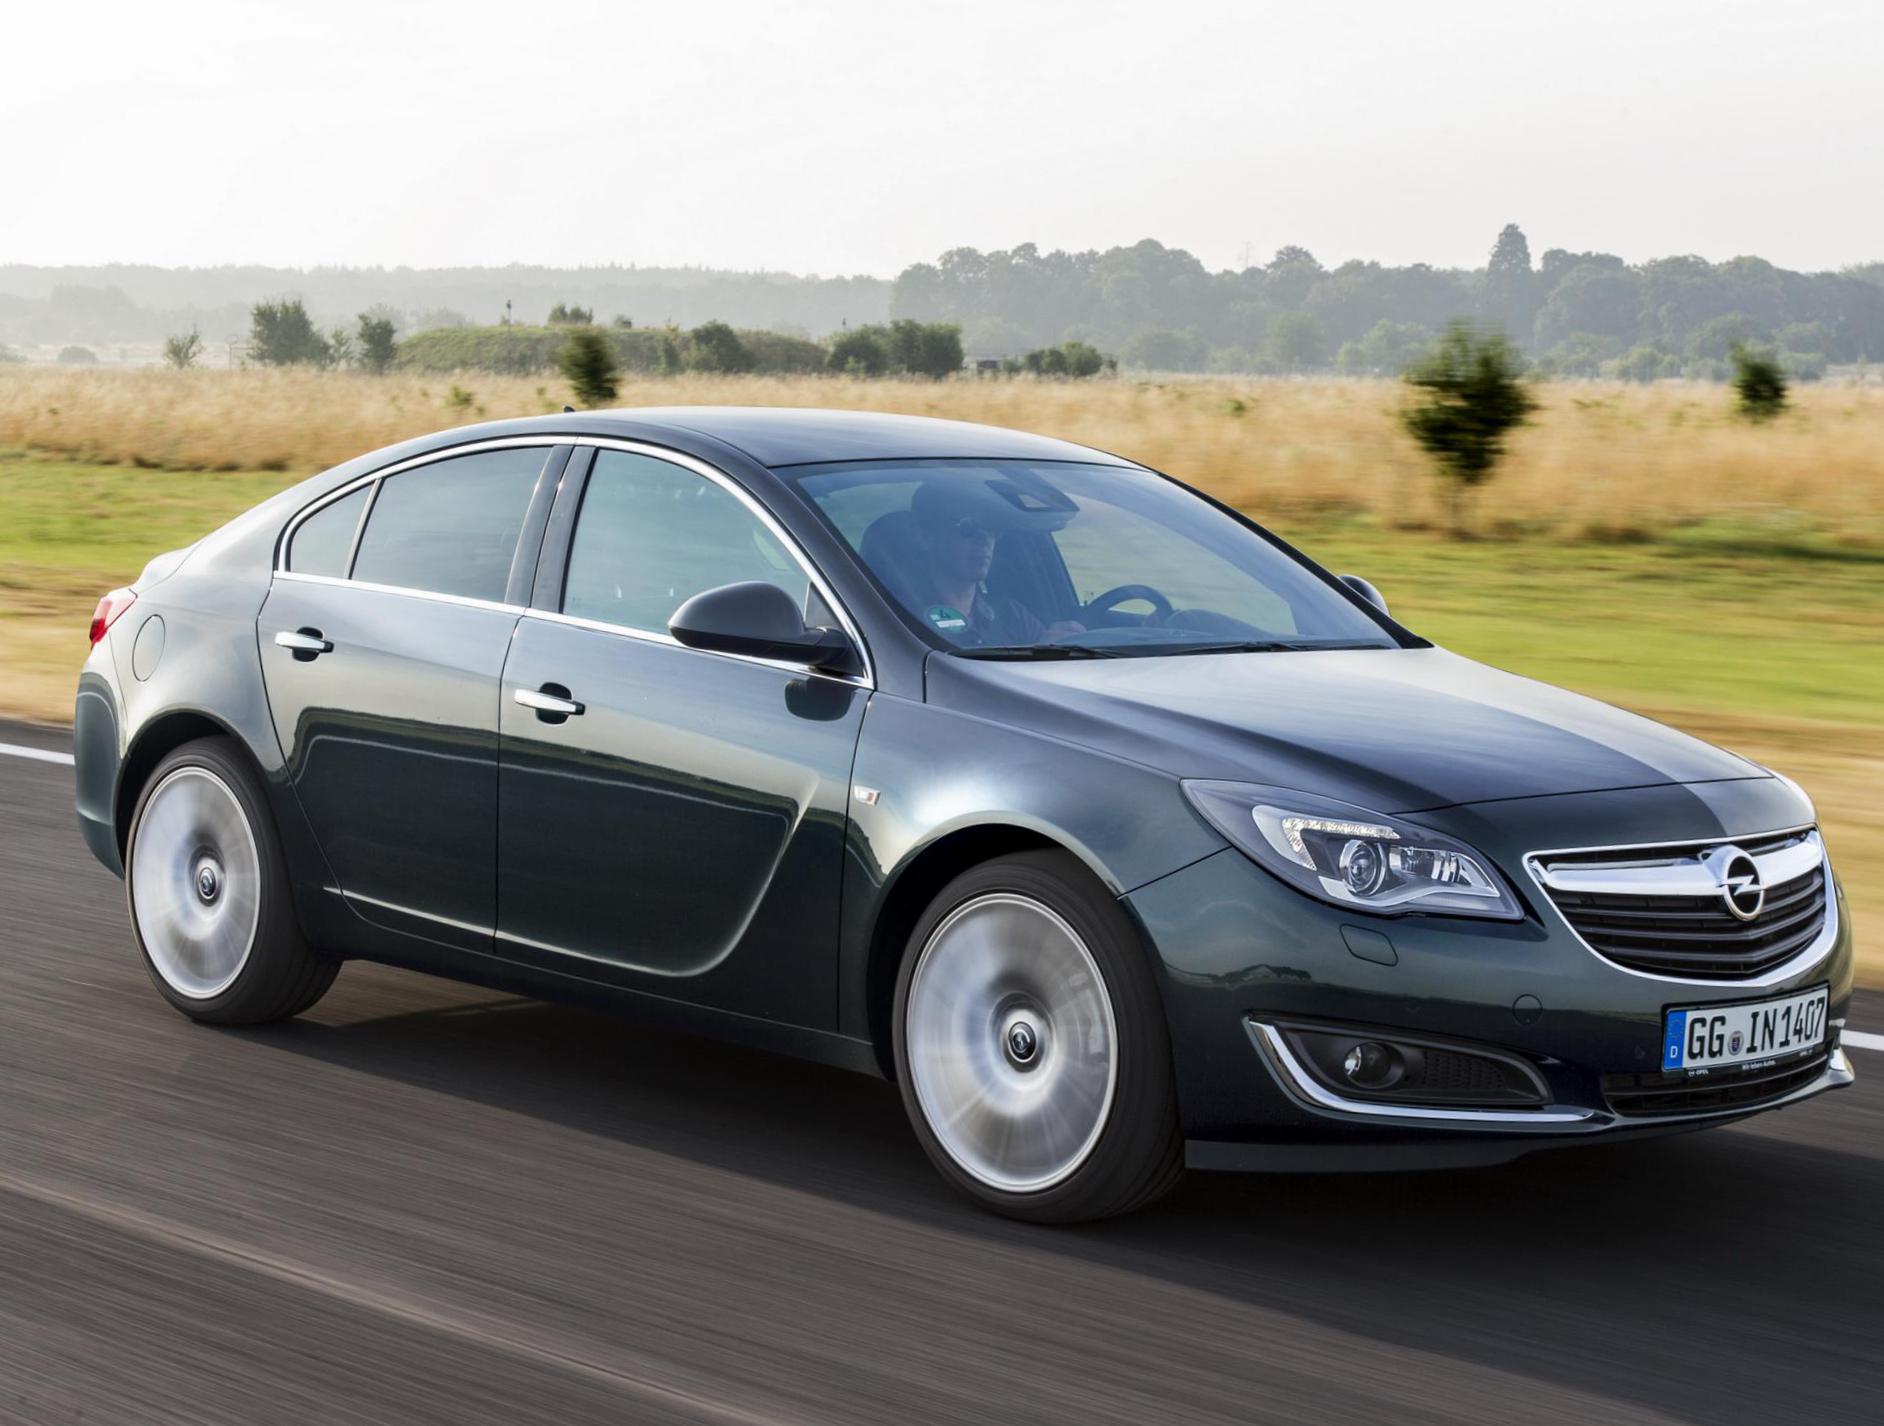 Opel Insignia Hatchback Characteristics 2015